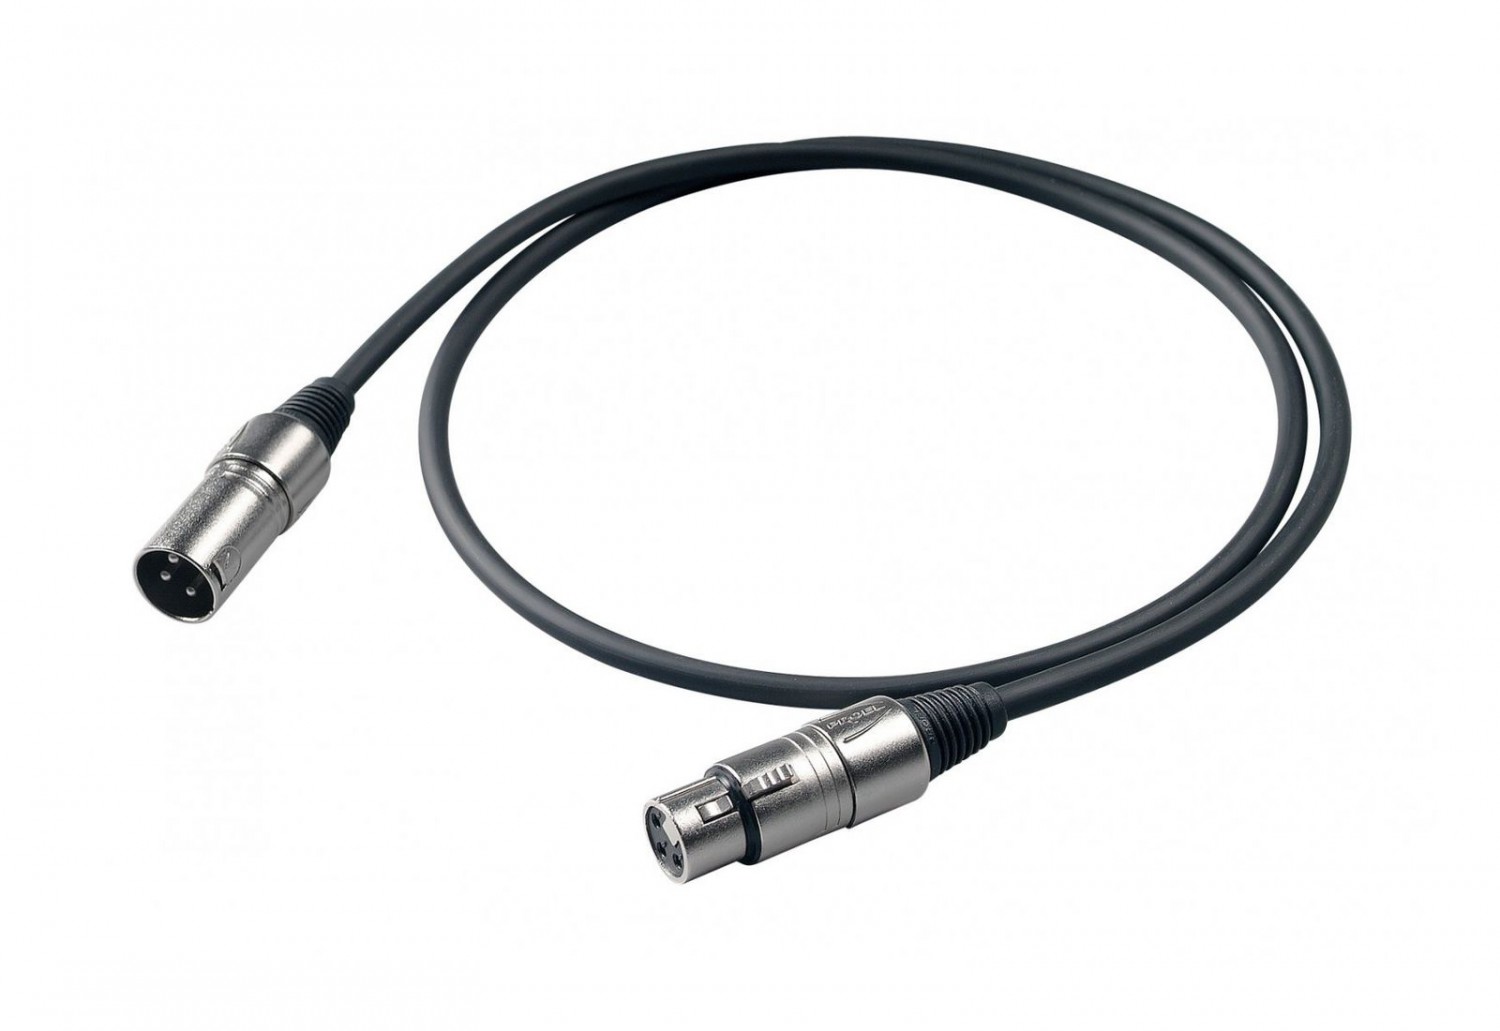 Proel BULK250LU05 - kabel mikrofonowy XLRM-XLRF (0,5m)